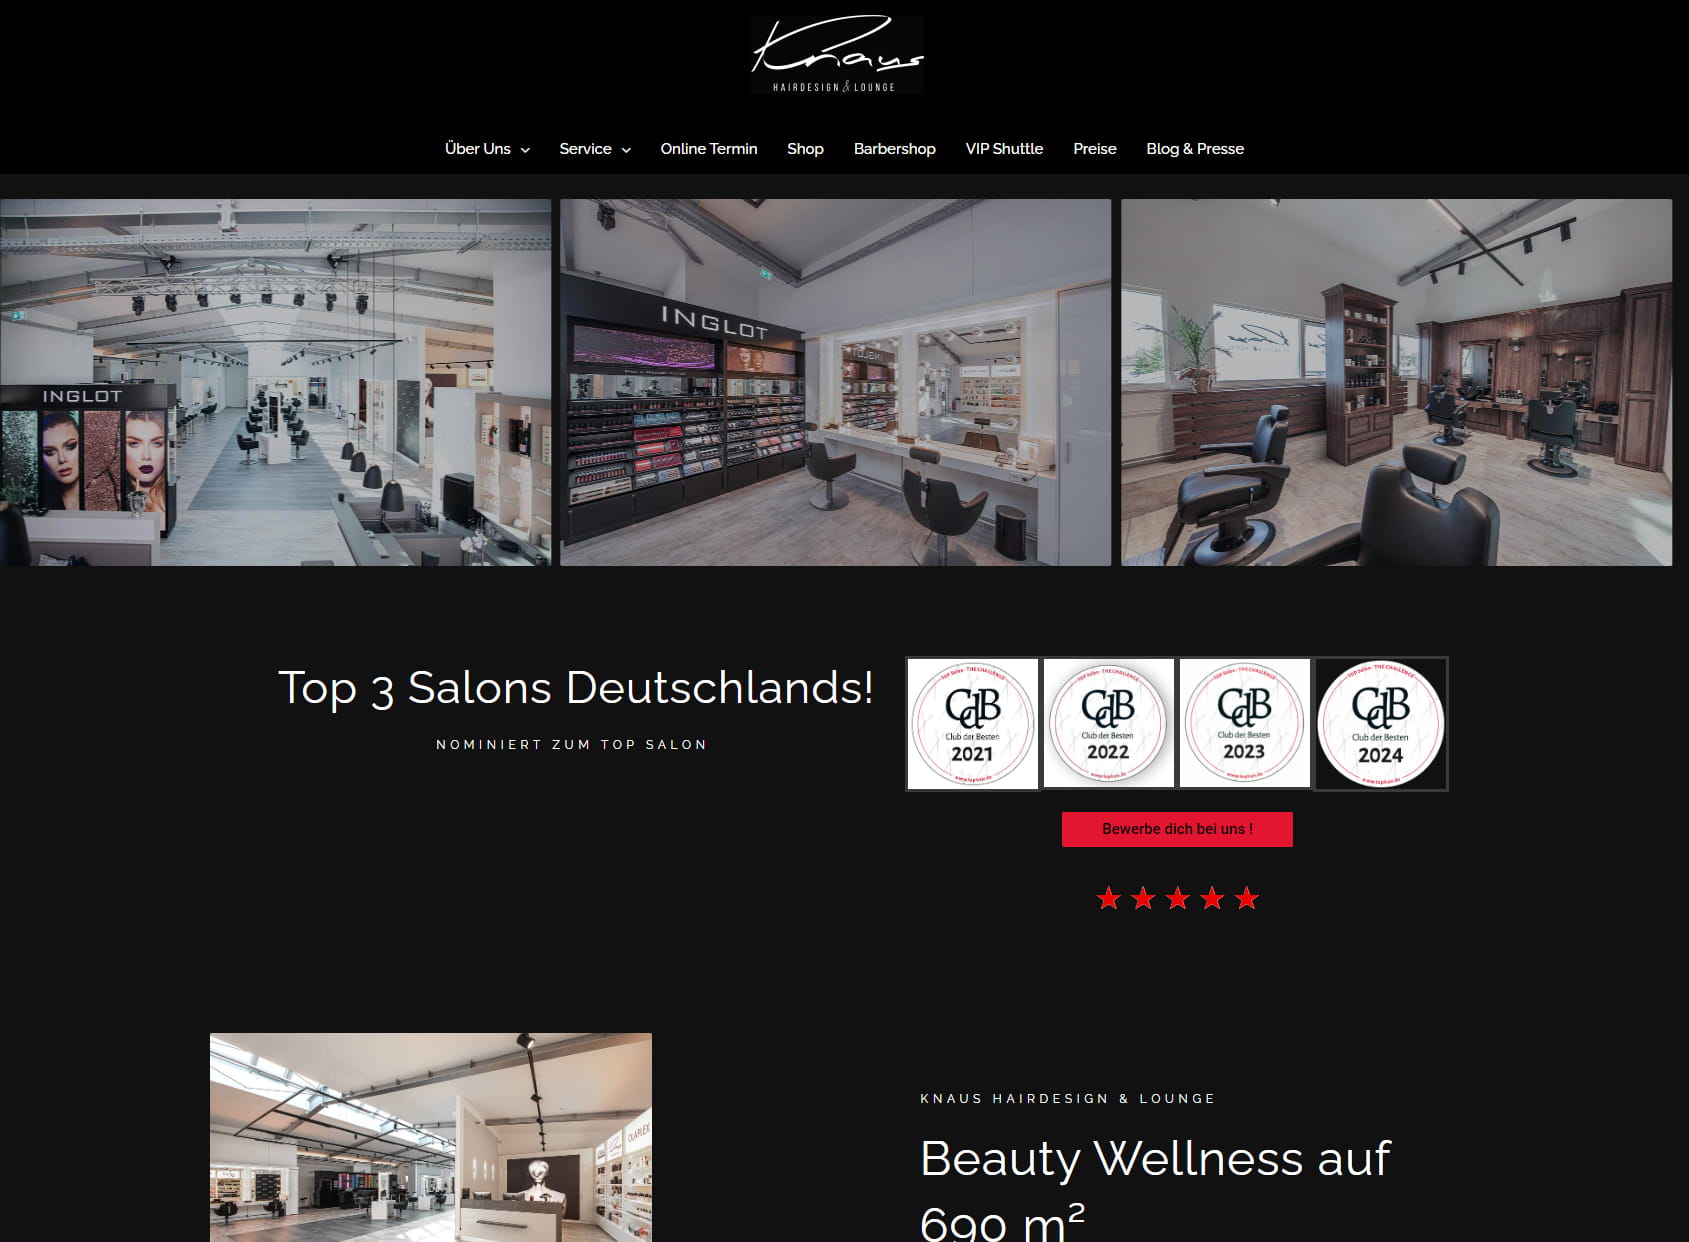 Friseur Knaus Hairdesign & Lounge | Wellness